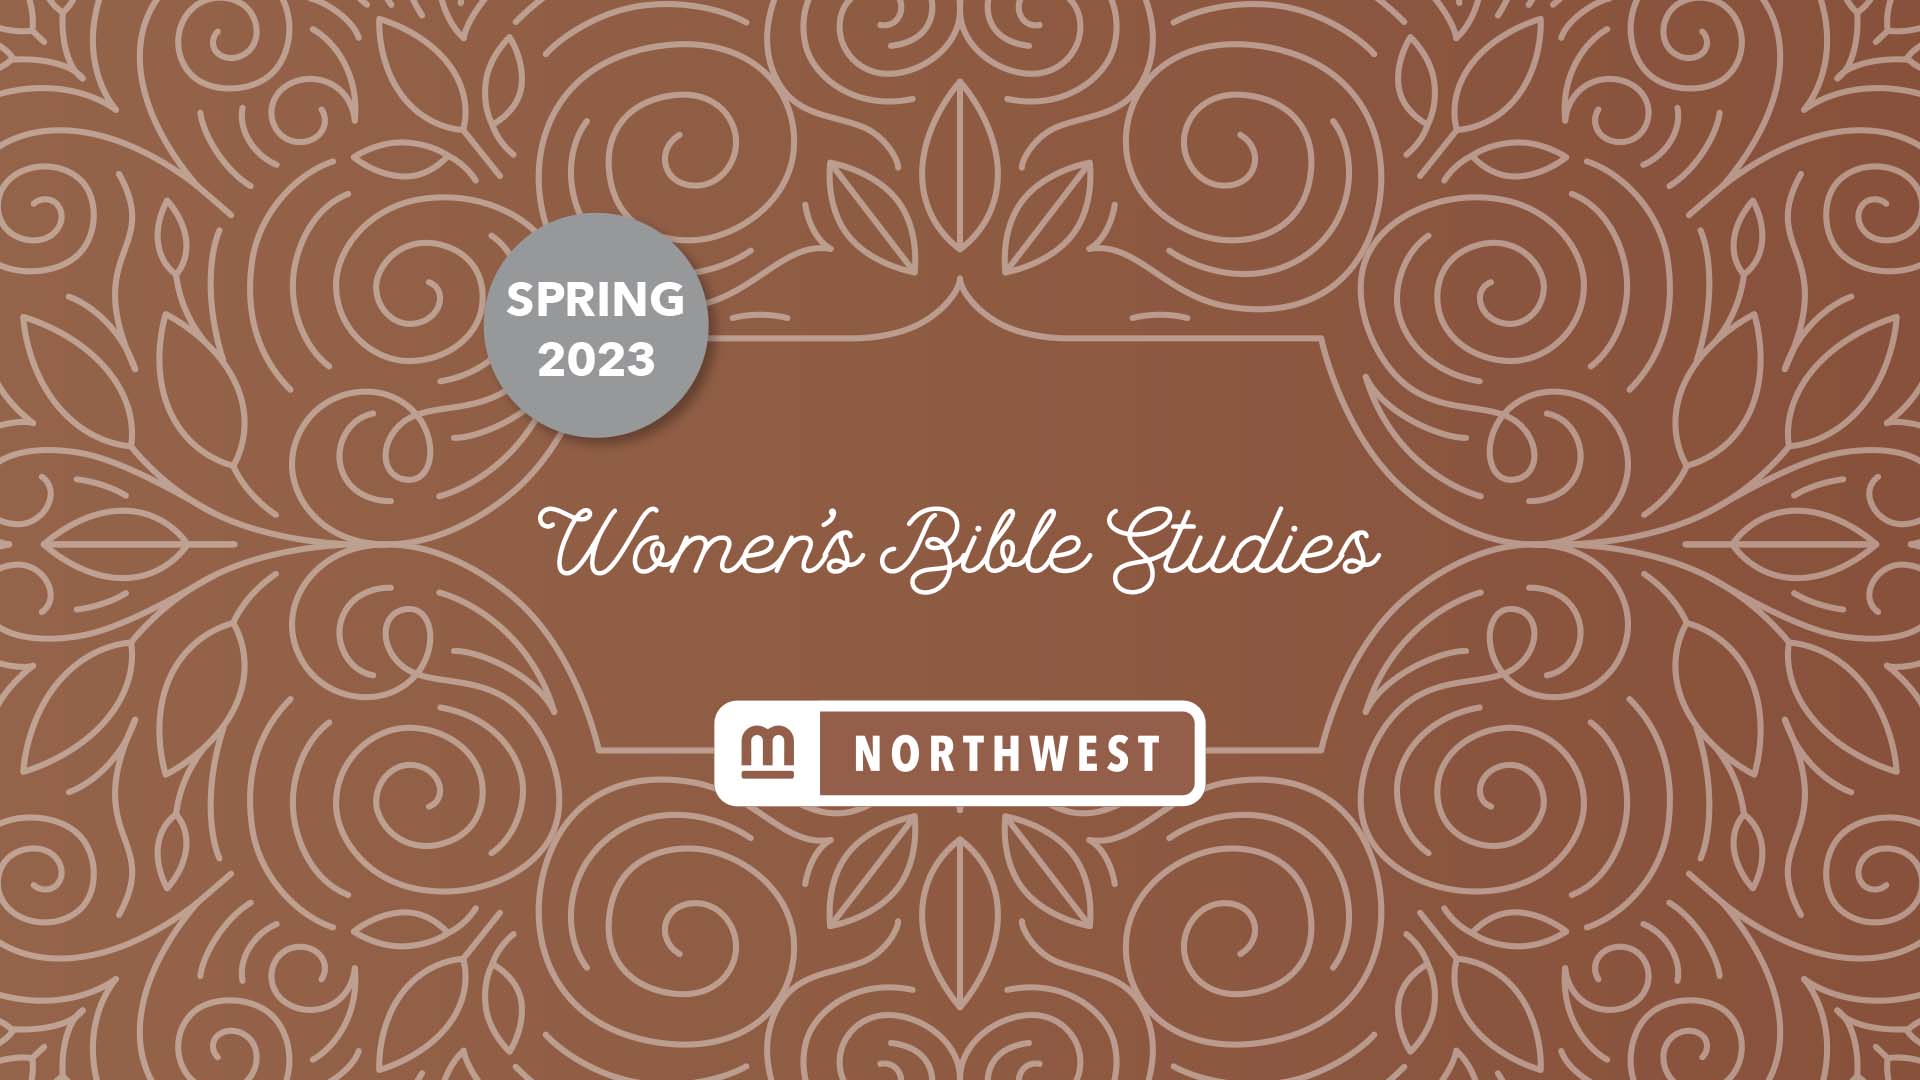 Mission City Women's Bible Studies Northwest Campus